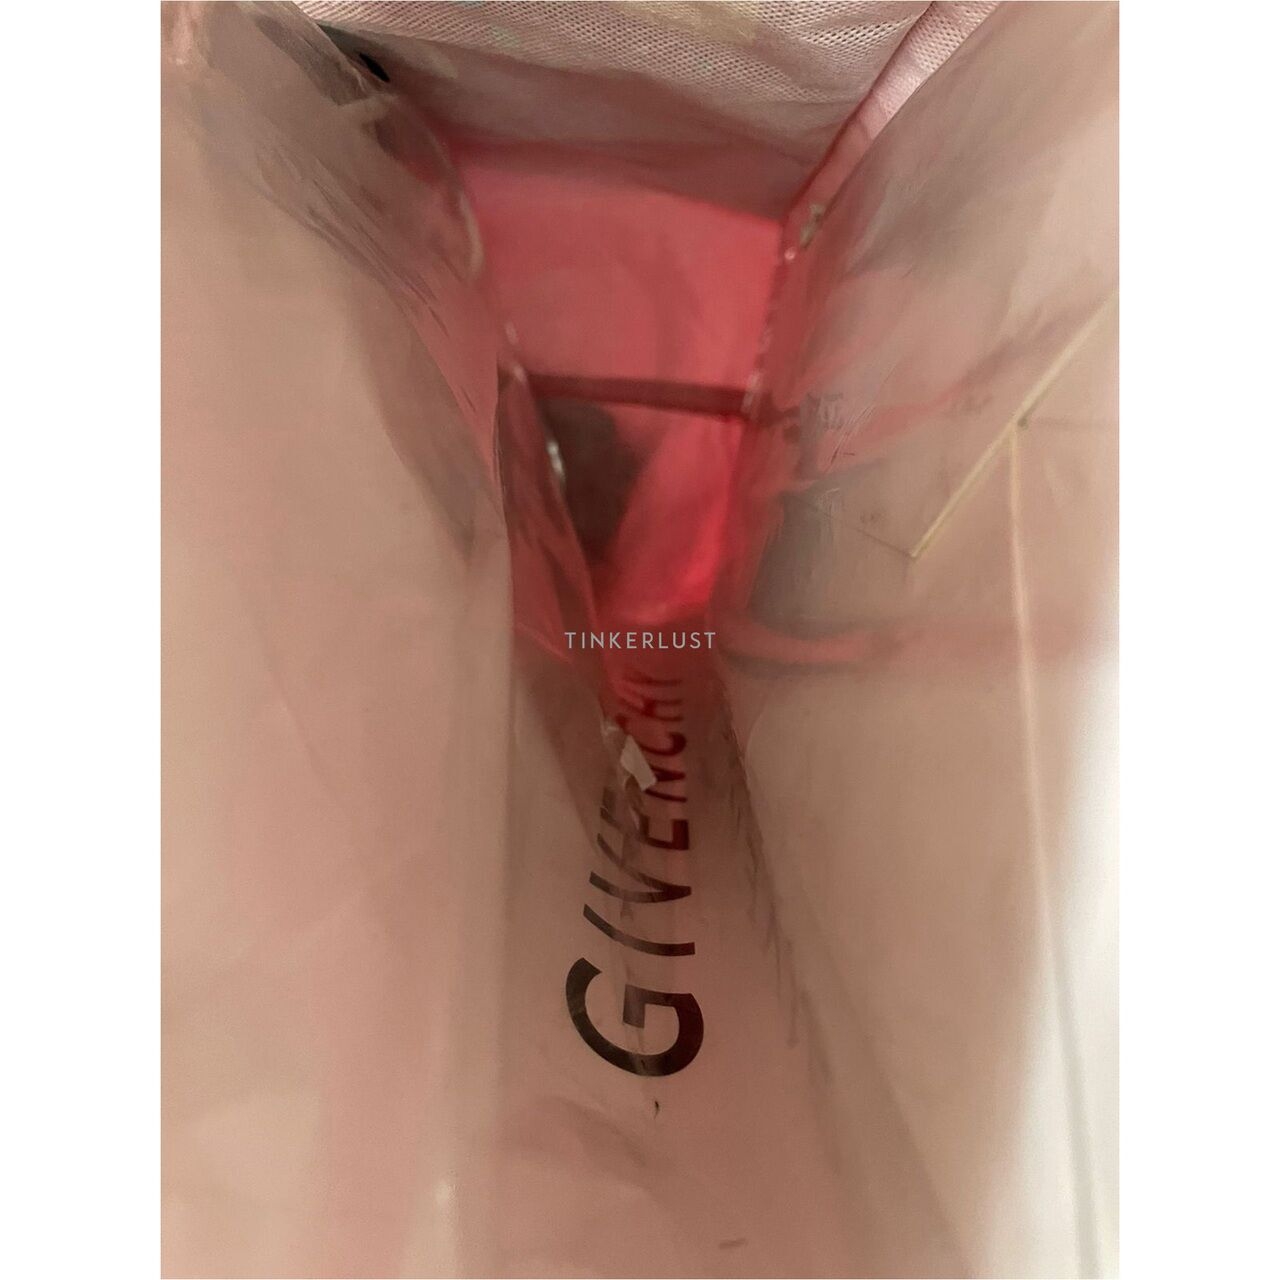 Givenchy Pandora Box Medium Black Calfskin Shoulder Bag